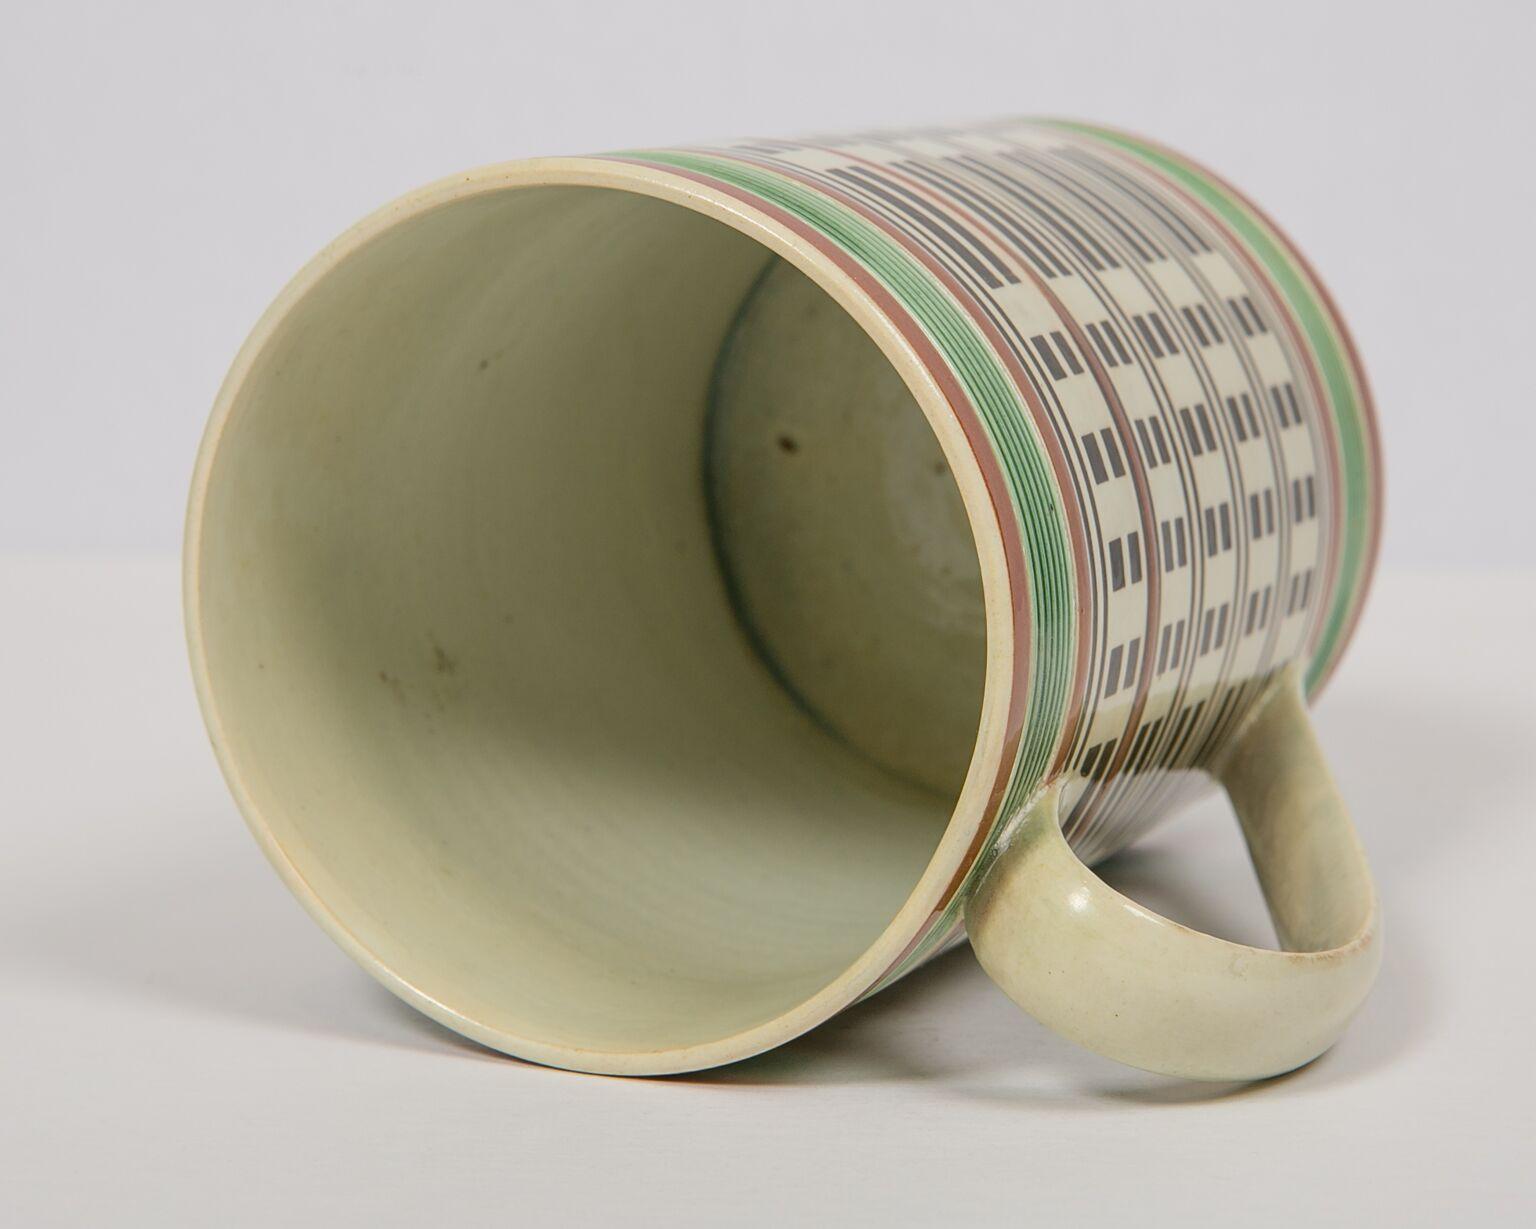 Glazed Antique Mochaware Mug Slip Decorated Made in England, circa 1815